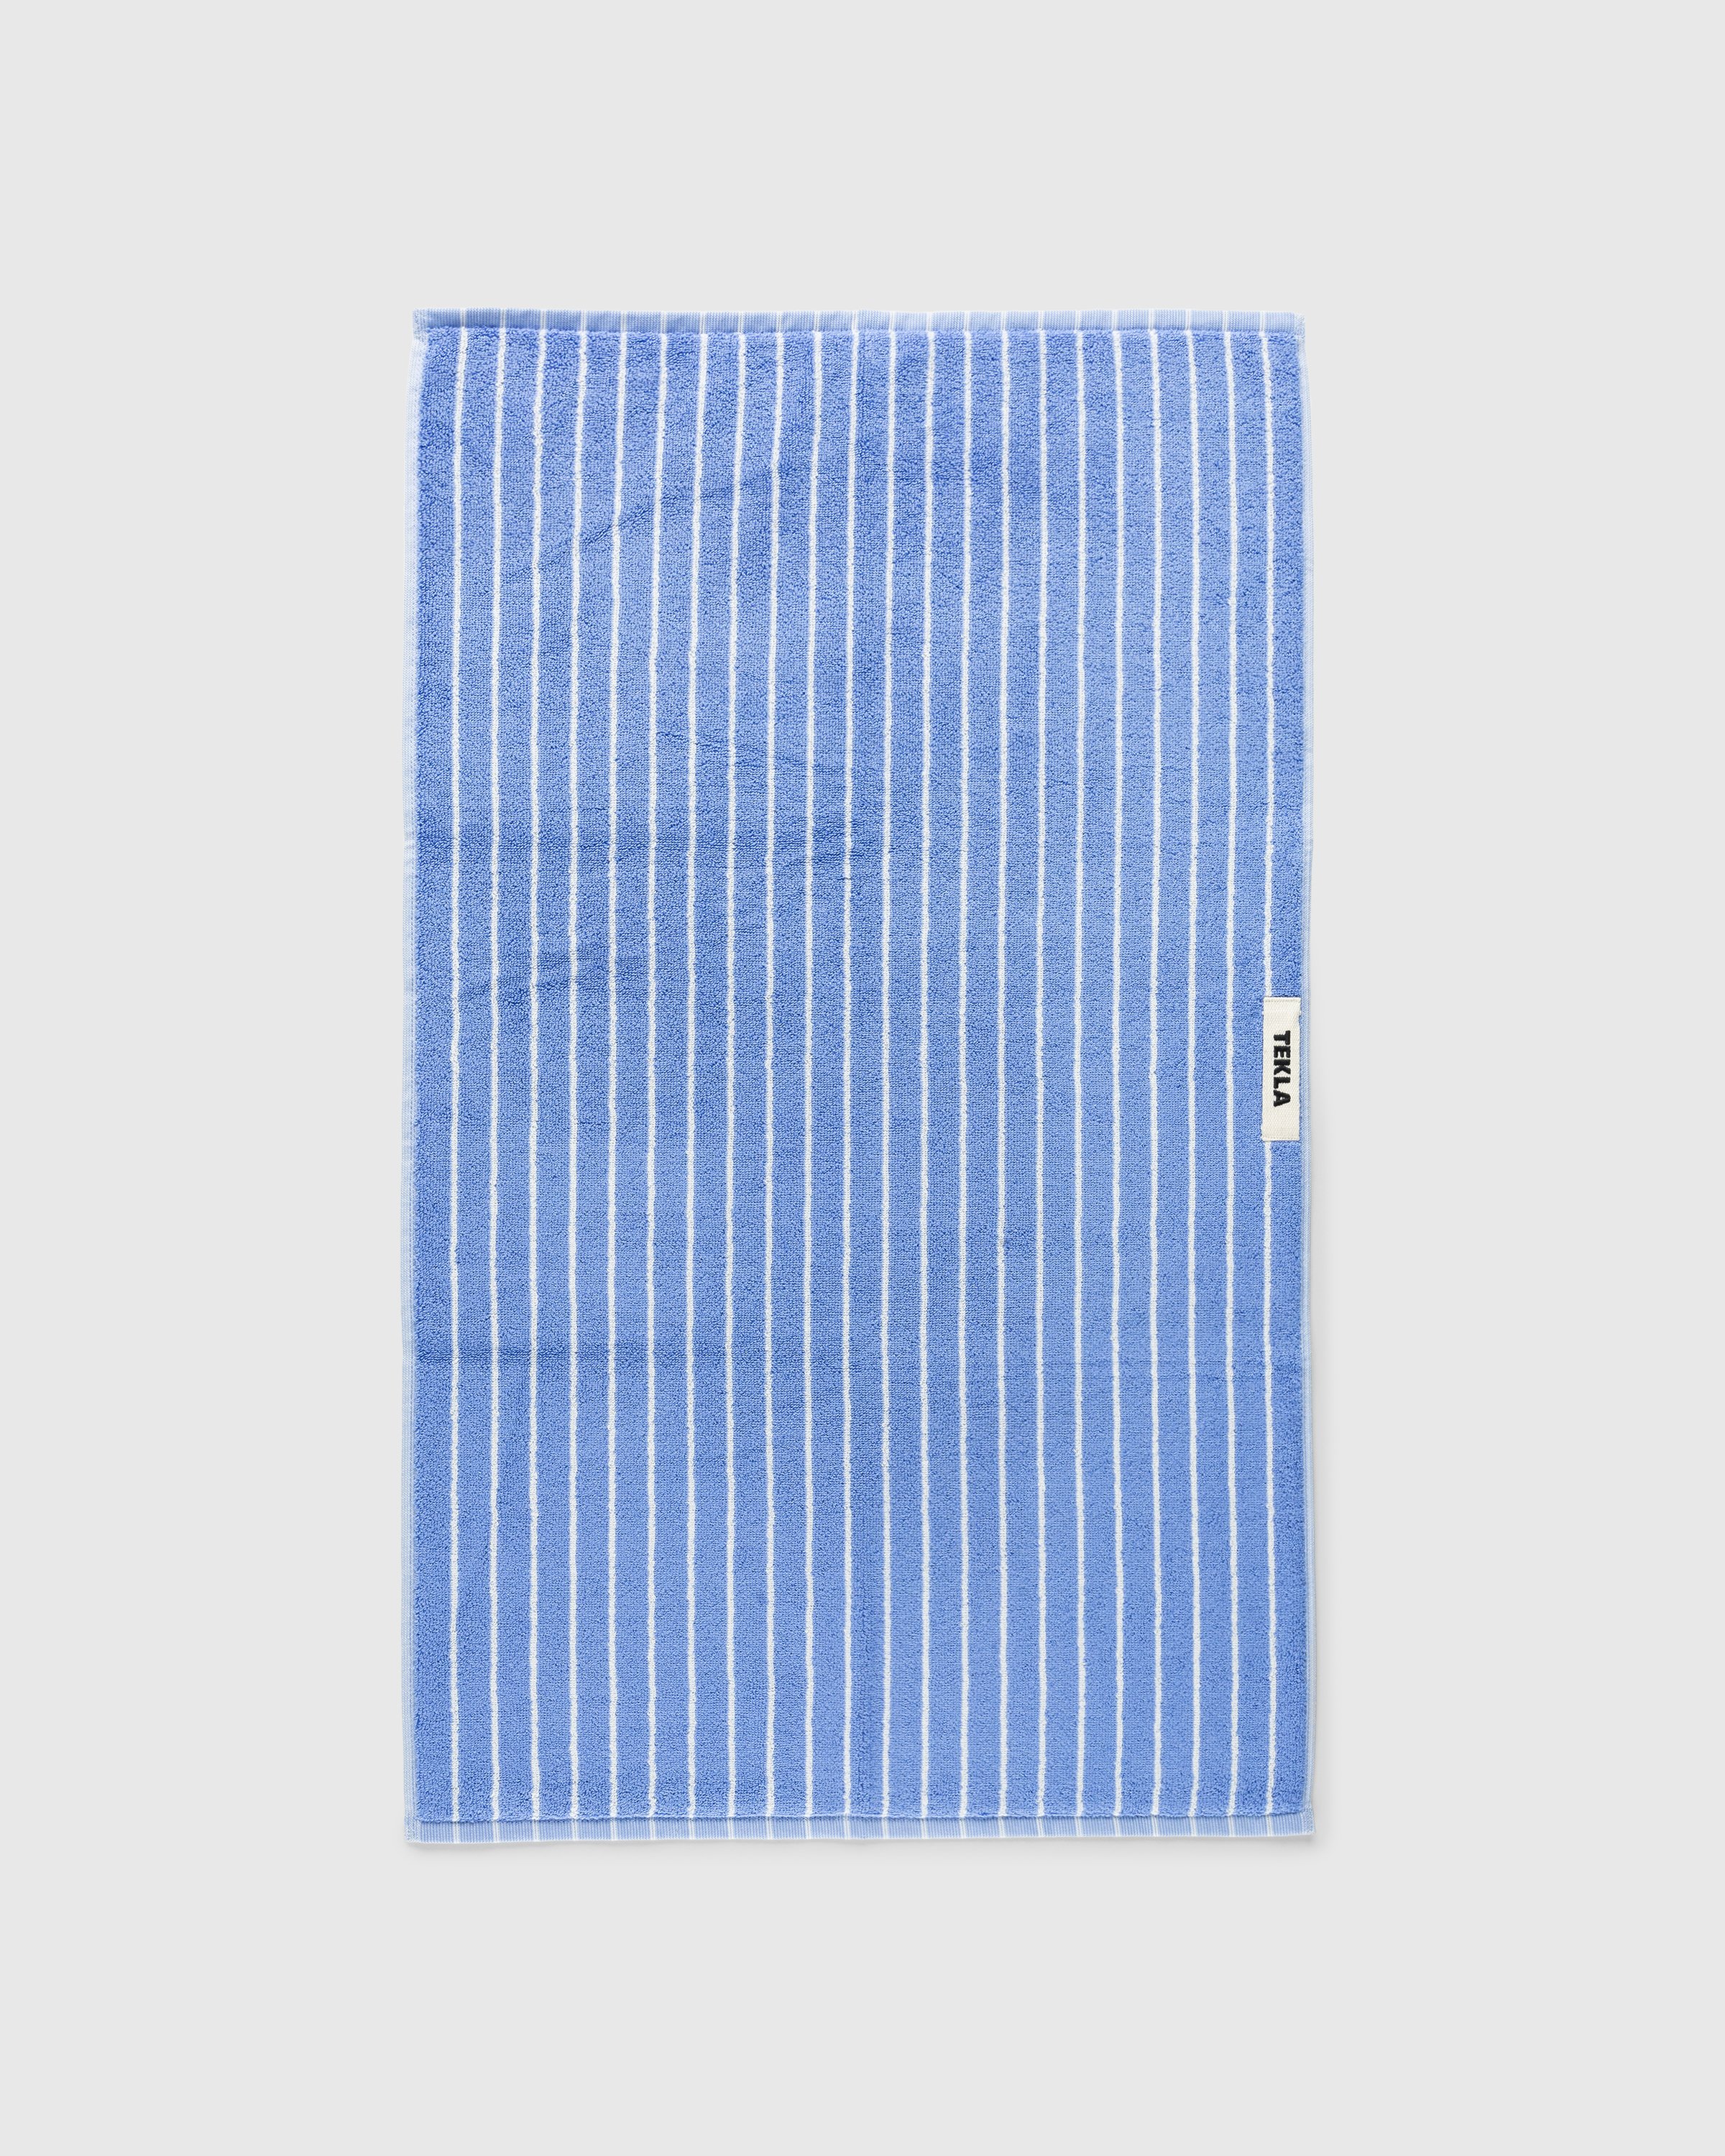 Tekla - Hand Towel 50x80 Clear Blue Stripes - Lifestyle - Blue - Image 2